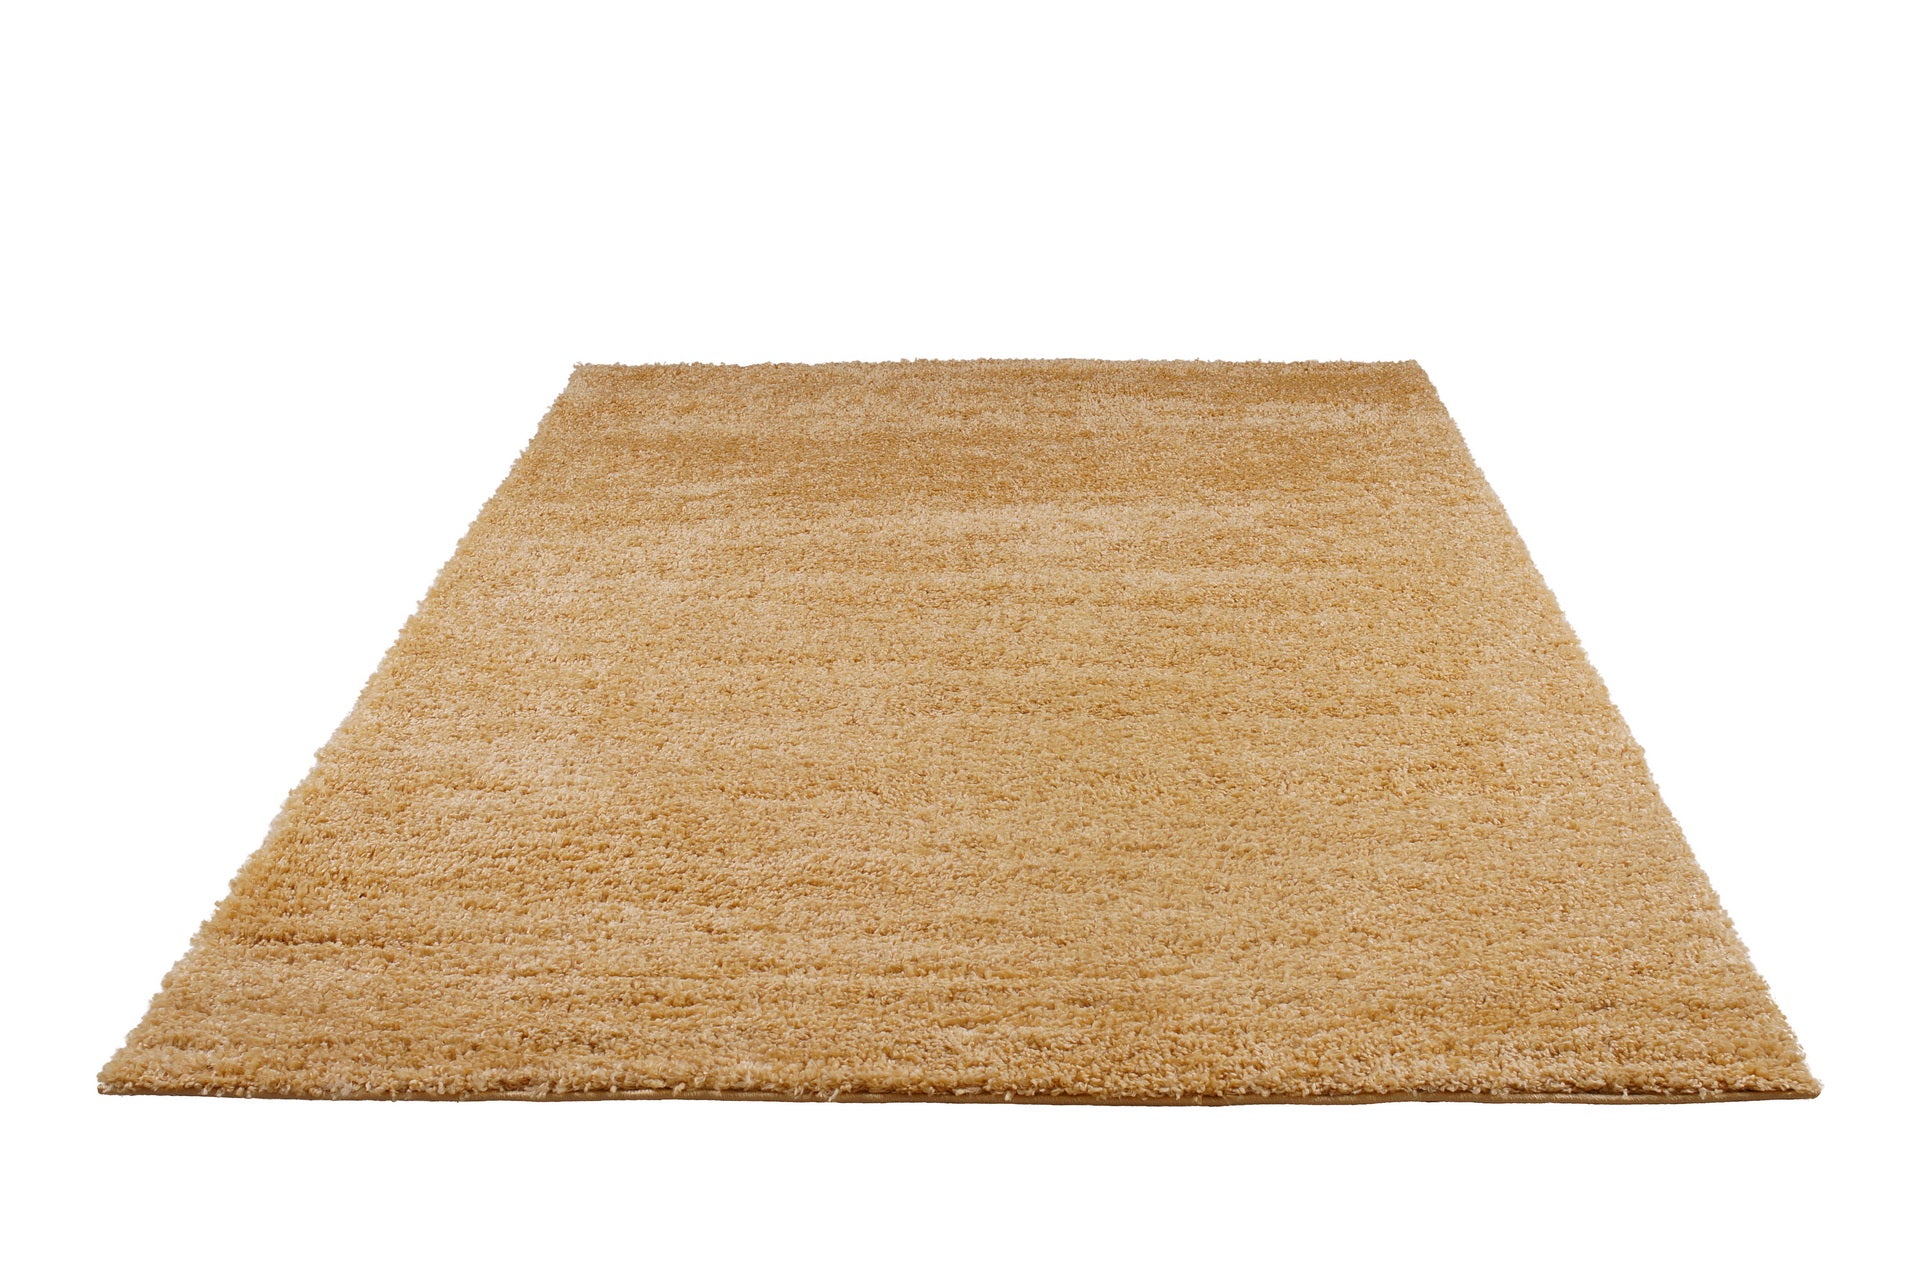 ladole rugs solid mustard yellow shaggy meknes durable medium pile indoor area rug carpet 8x11 710 x 105 240cm x 320cm 6x8, 6x9 ft Living Room, Bedroom, Dining Area, Kitchen Carpet